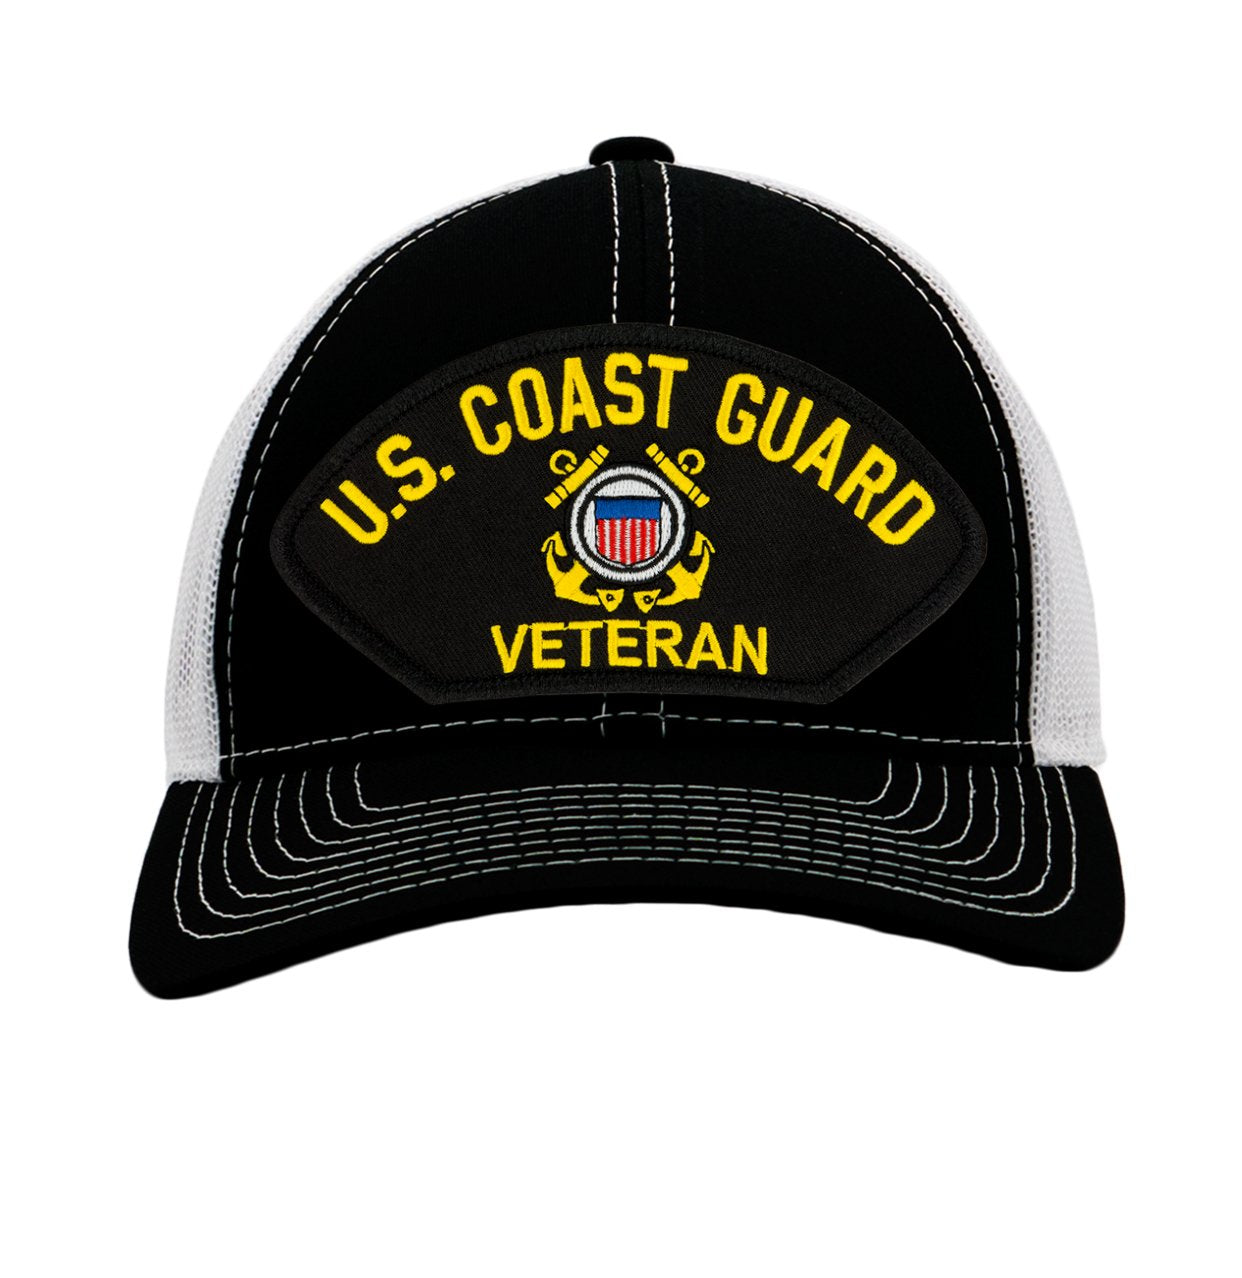 US Coast Guard Veteran Hat - Multiple Colors Available